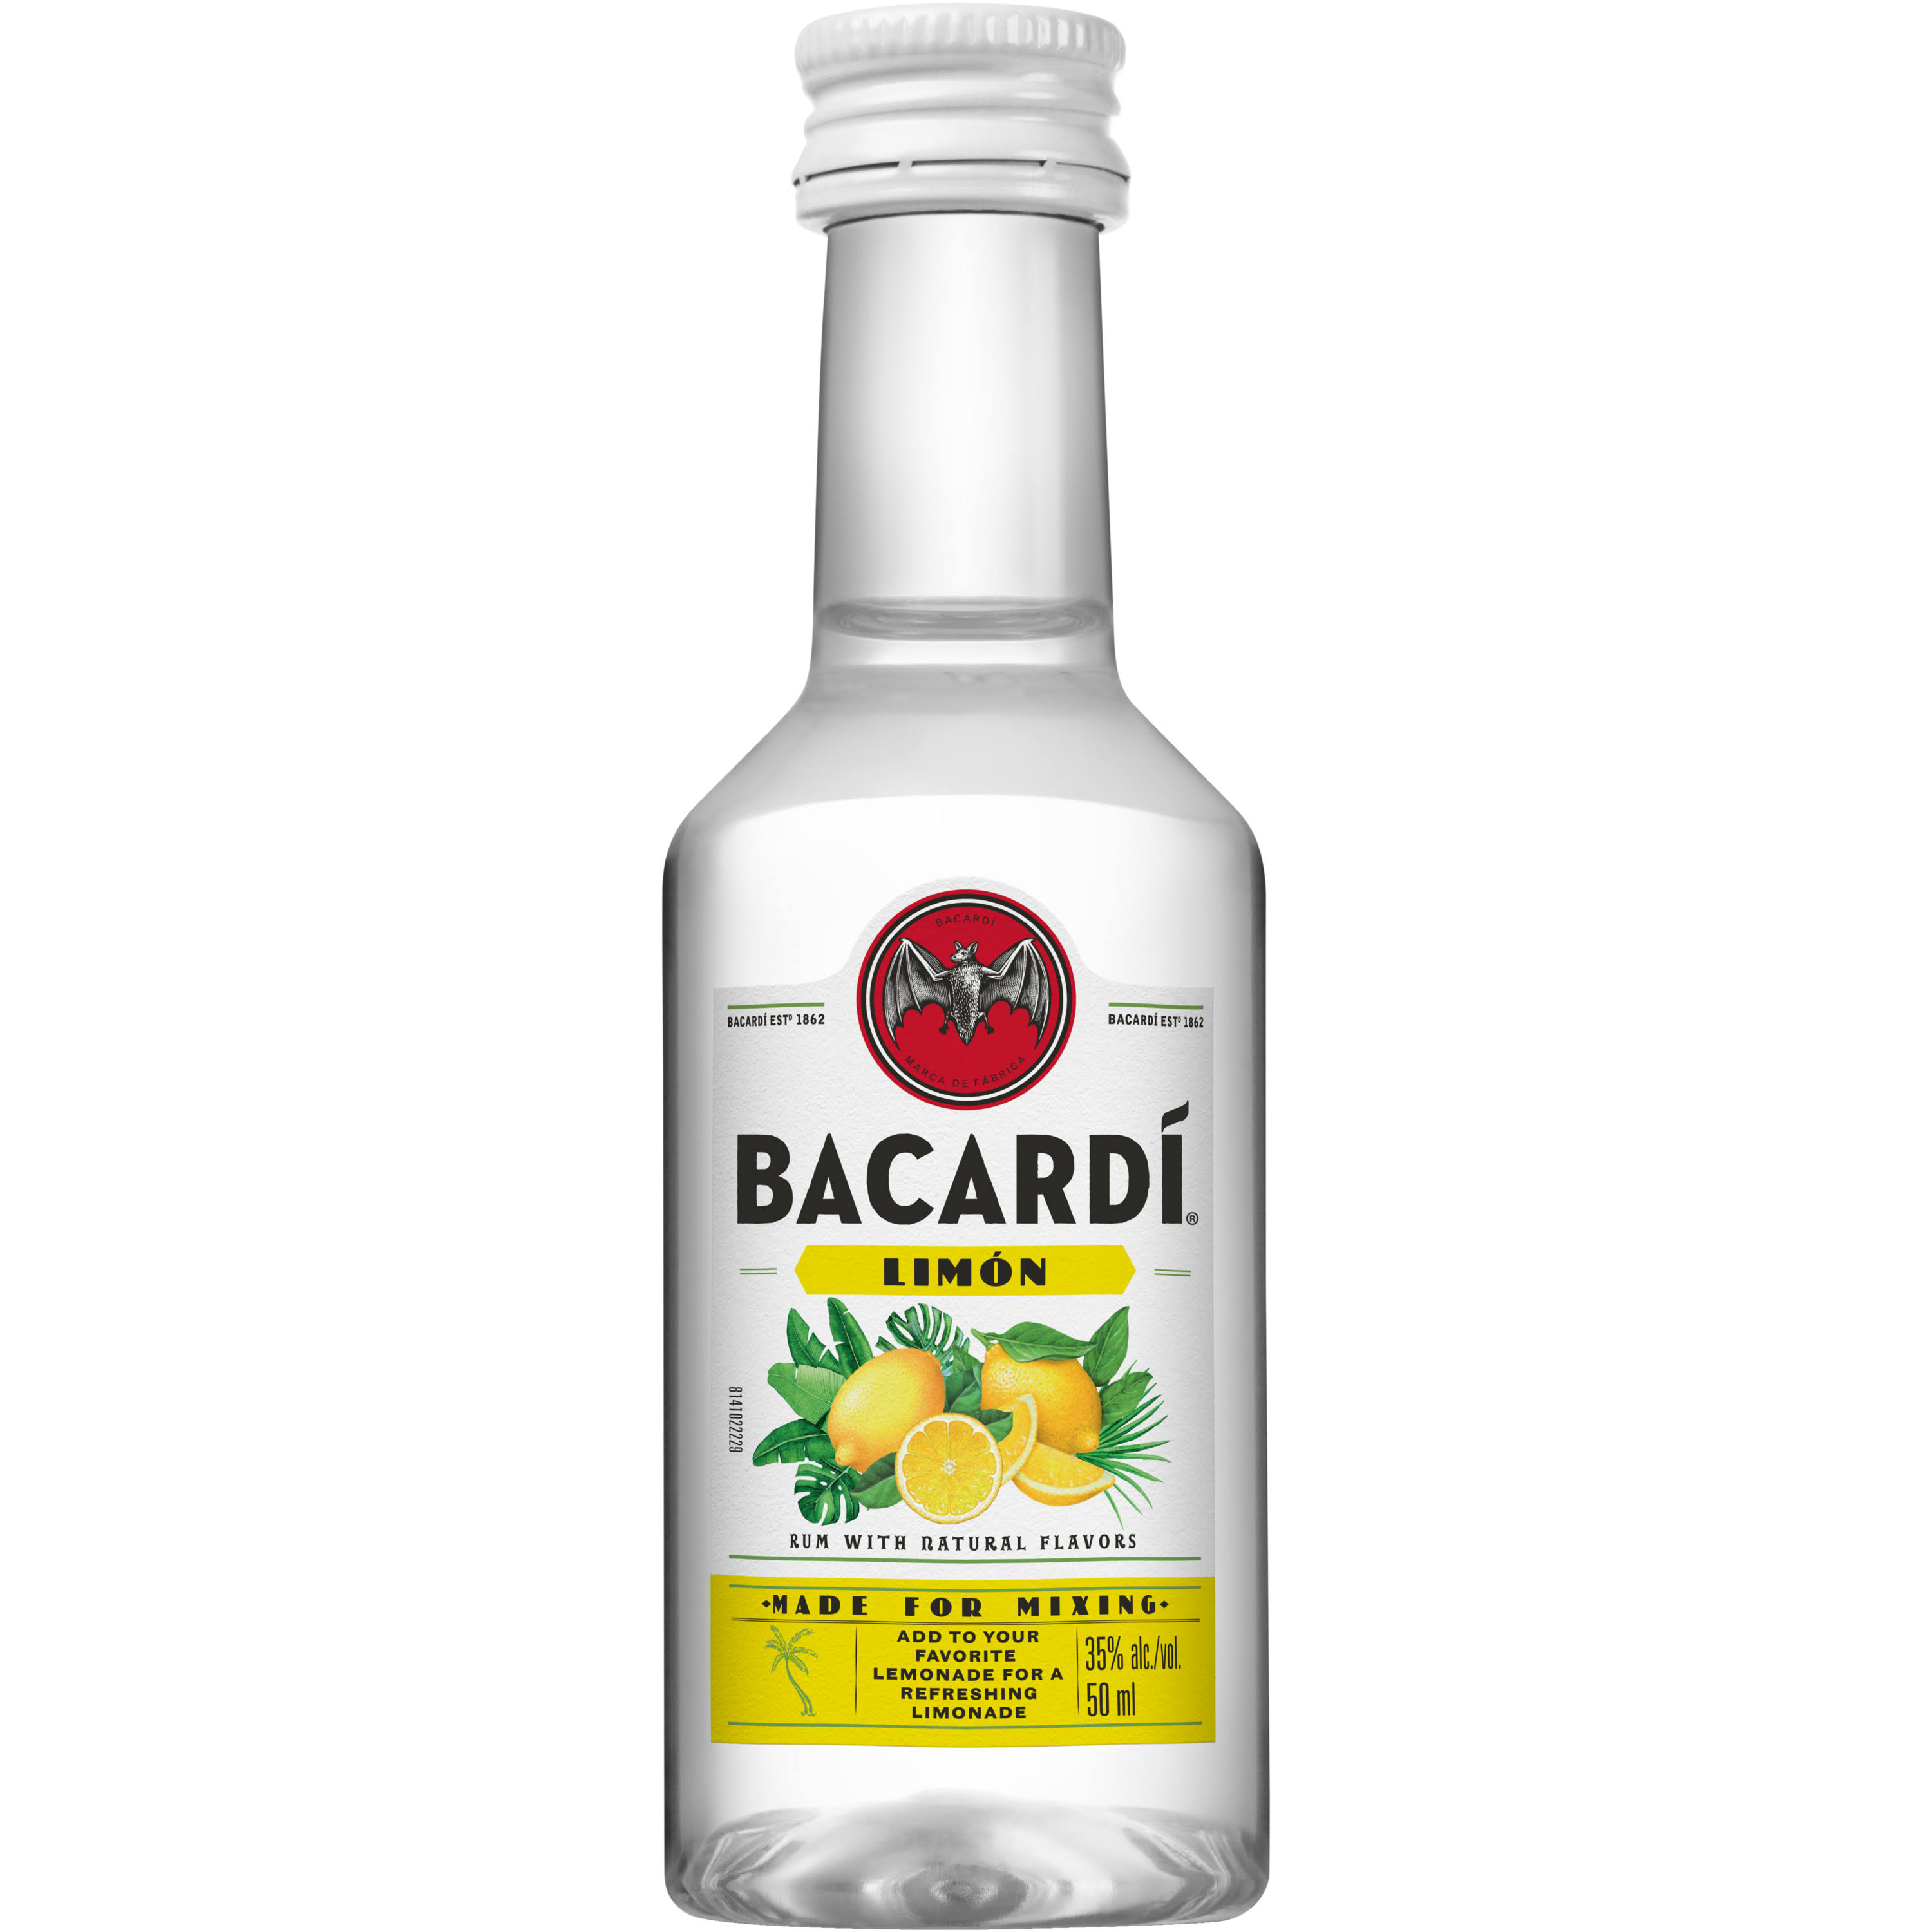 Bacardi Limon Rum 5cl Clear